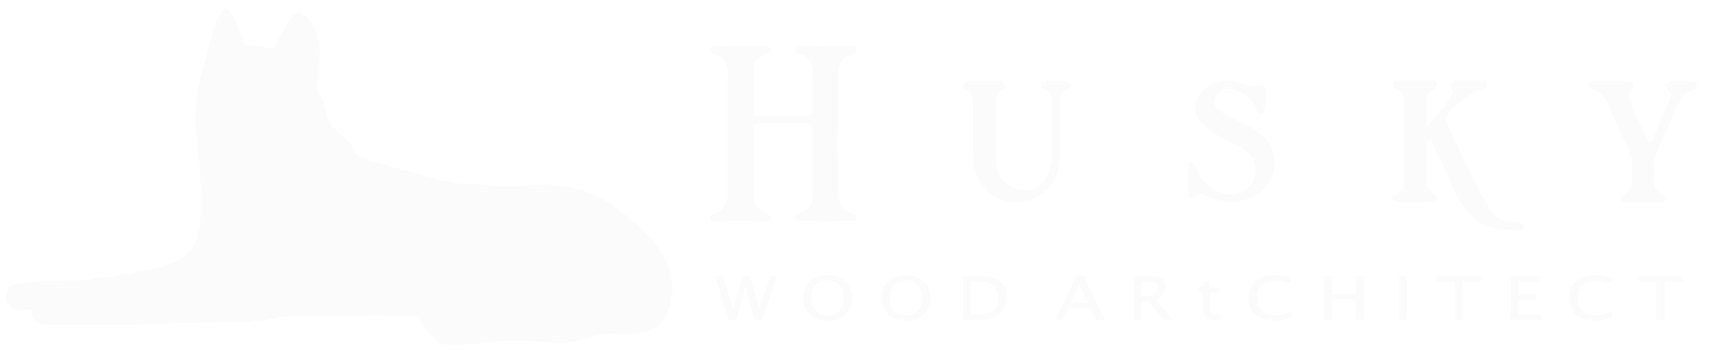 HuskyWood ARtCHITECT